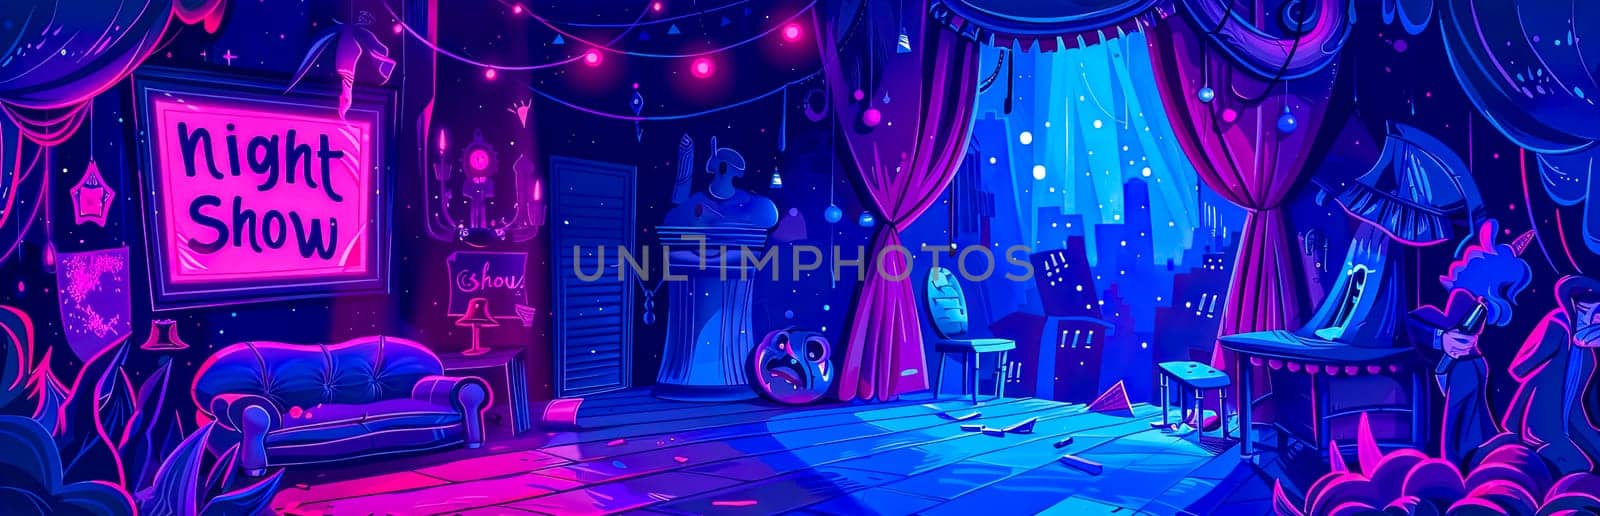 Vibrant night show stage illustration by Edophoto